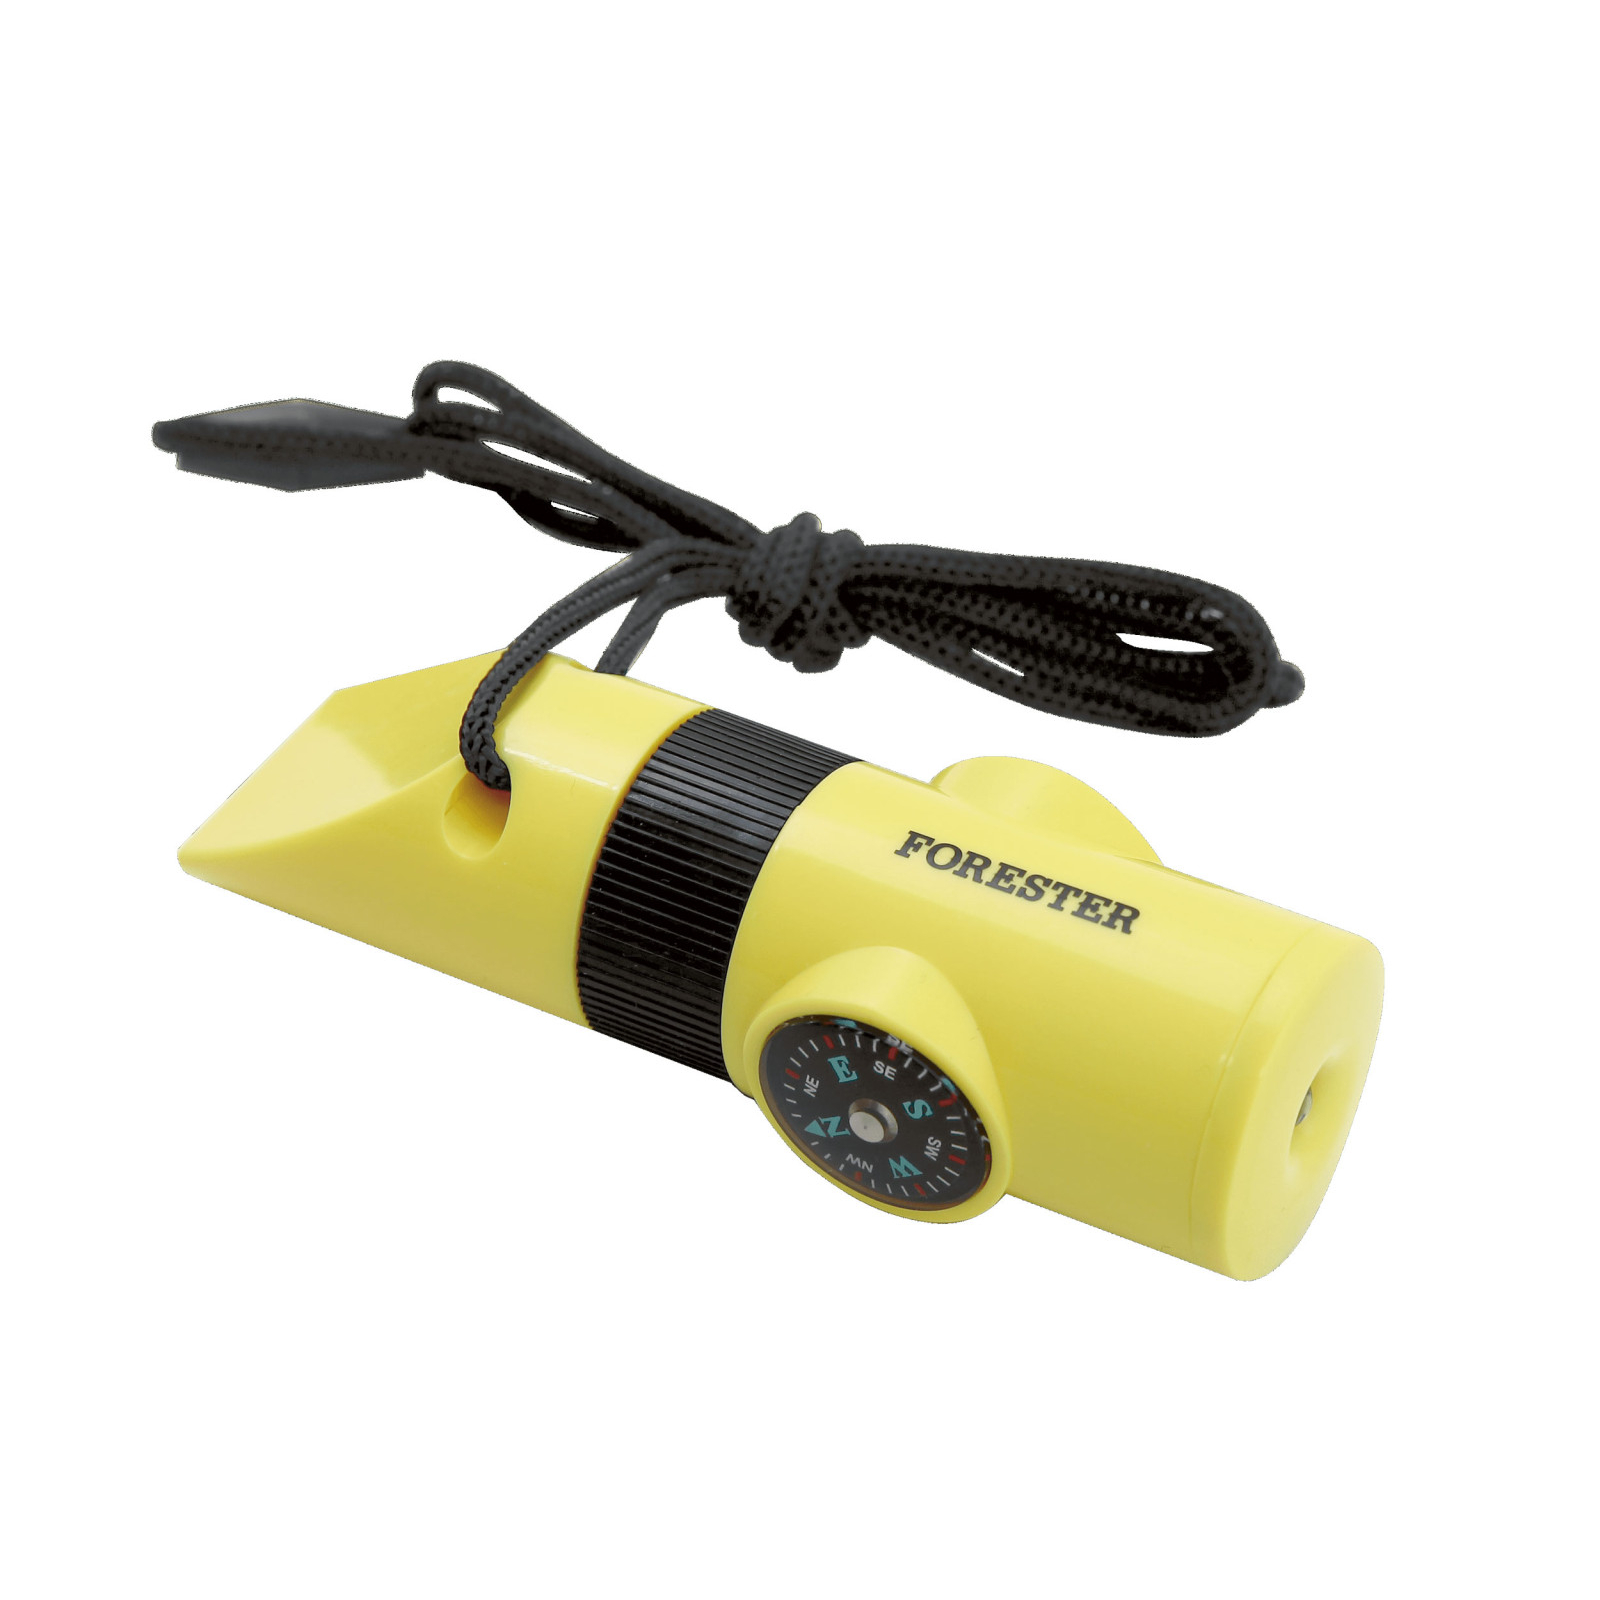 Свисток-фонарик с компасом Forester Mobile жёлтый с чёрным 10х3,3х2,8 см термосумка forester mobile жёлтая с чёрным 35х25х35 см